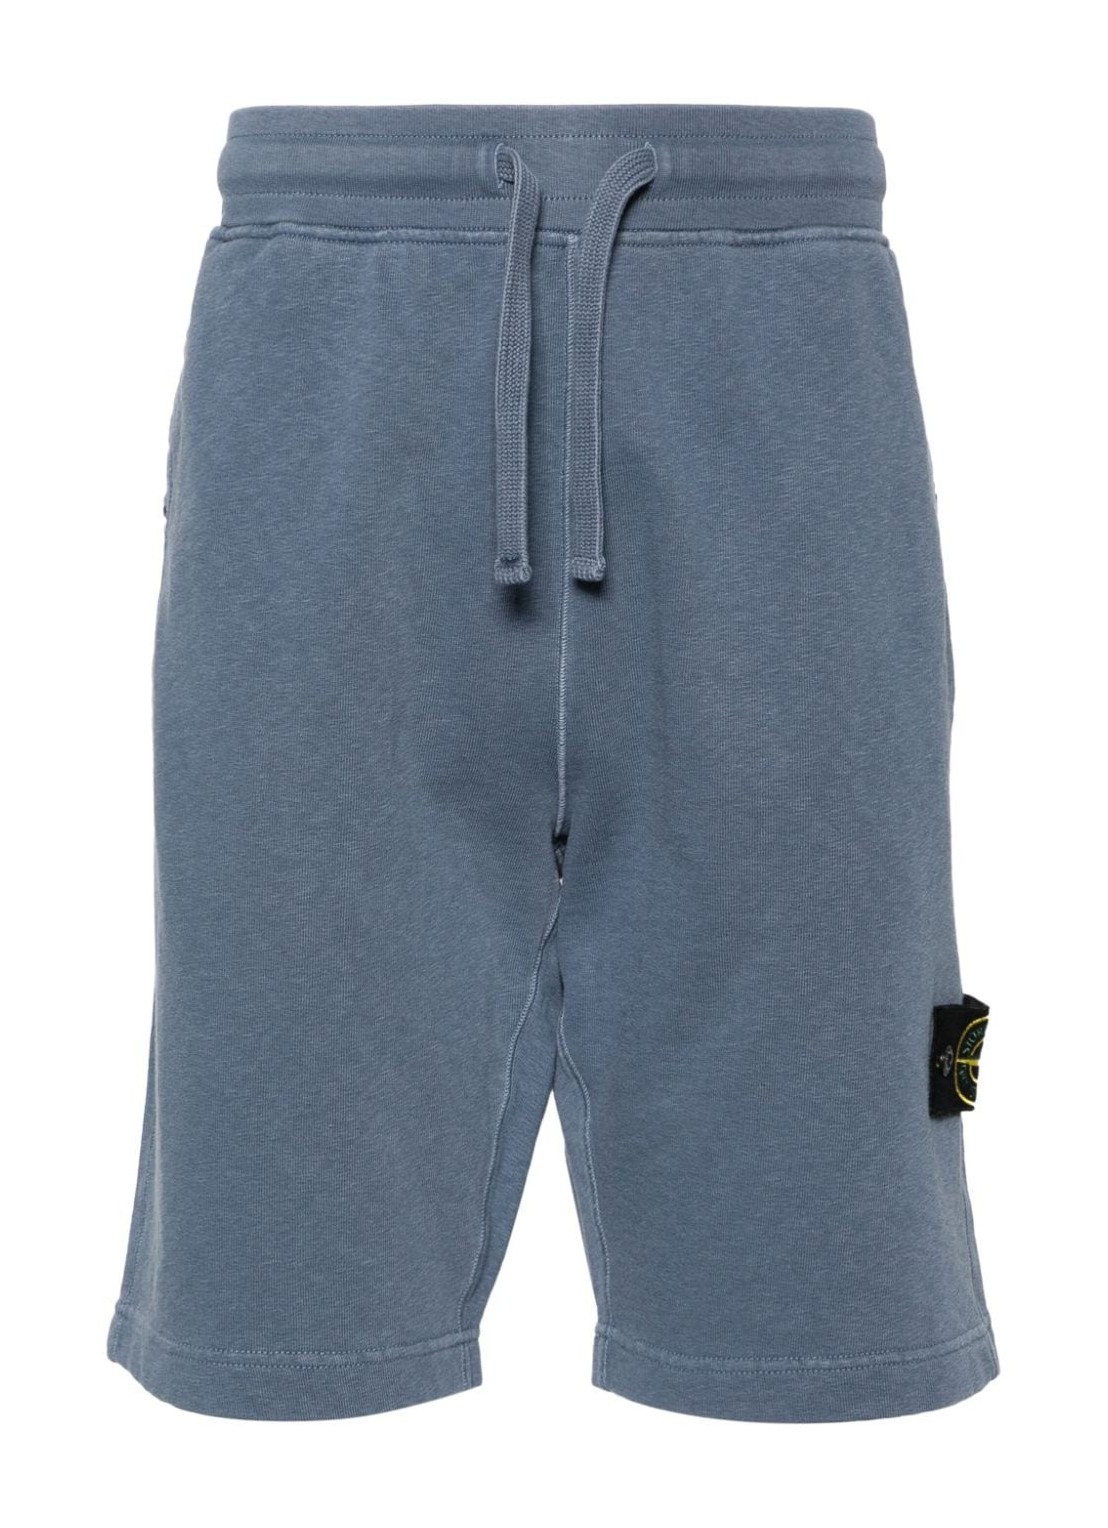 Pantalon corto stone island short pant manfleece shorts - 801563460 v0124 talla M
 